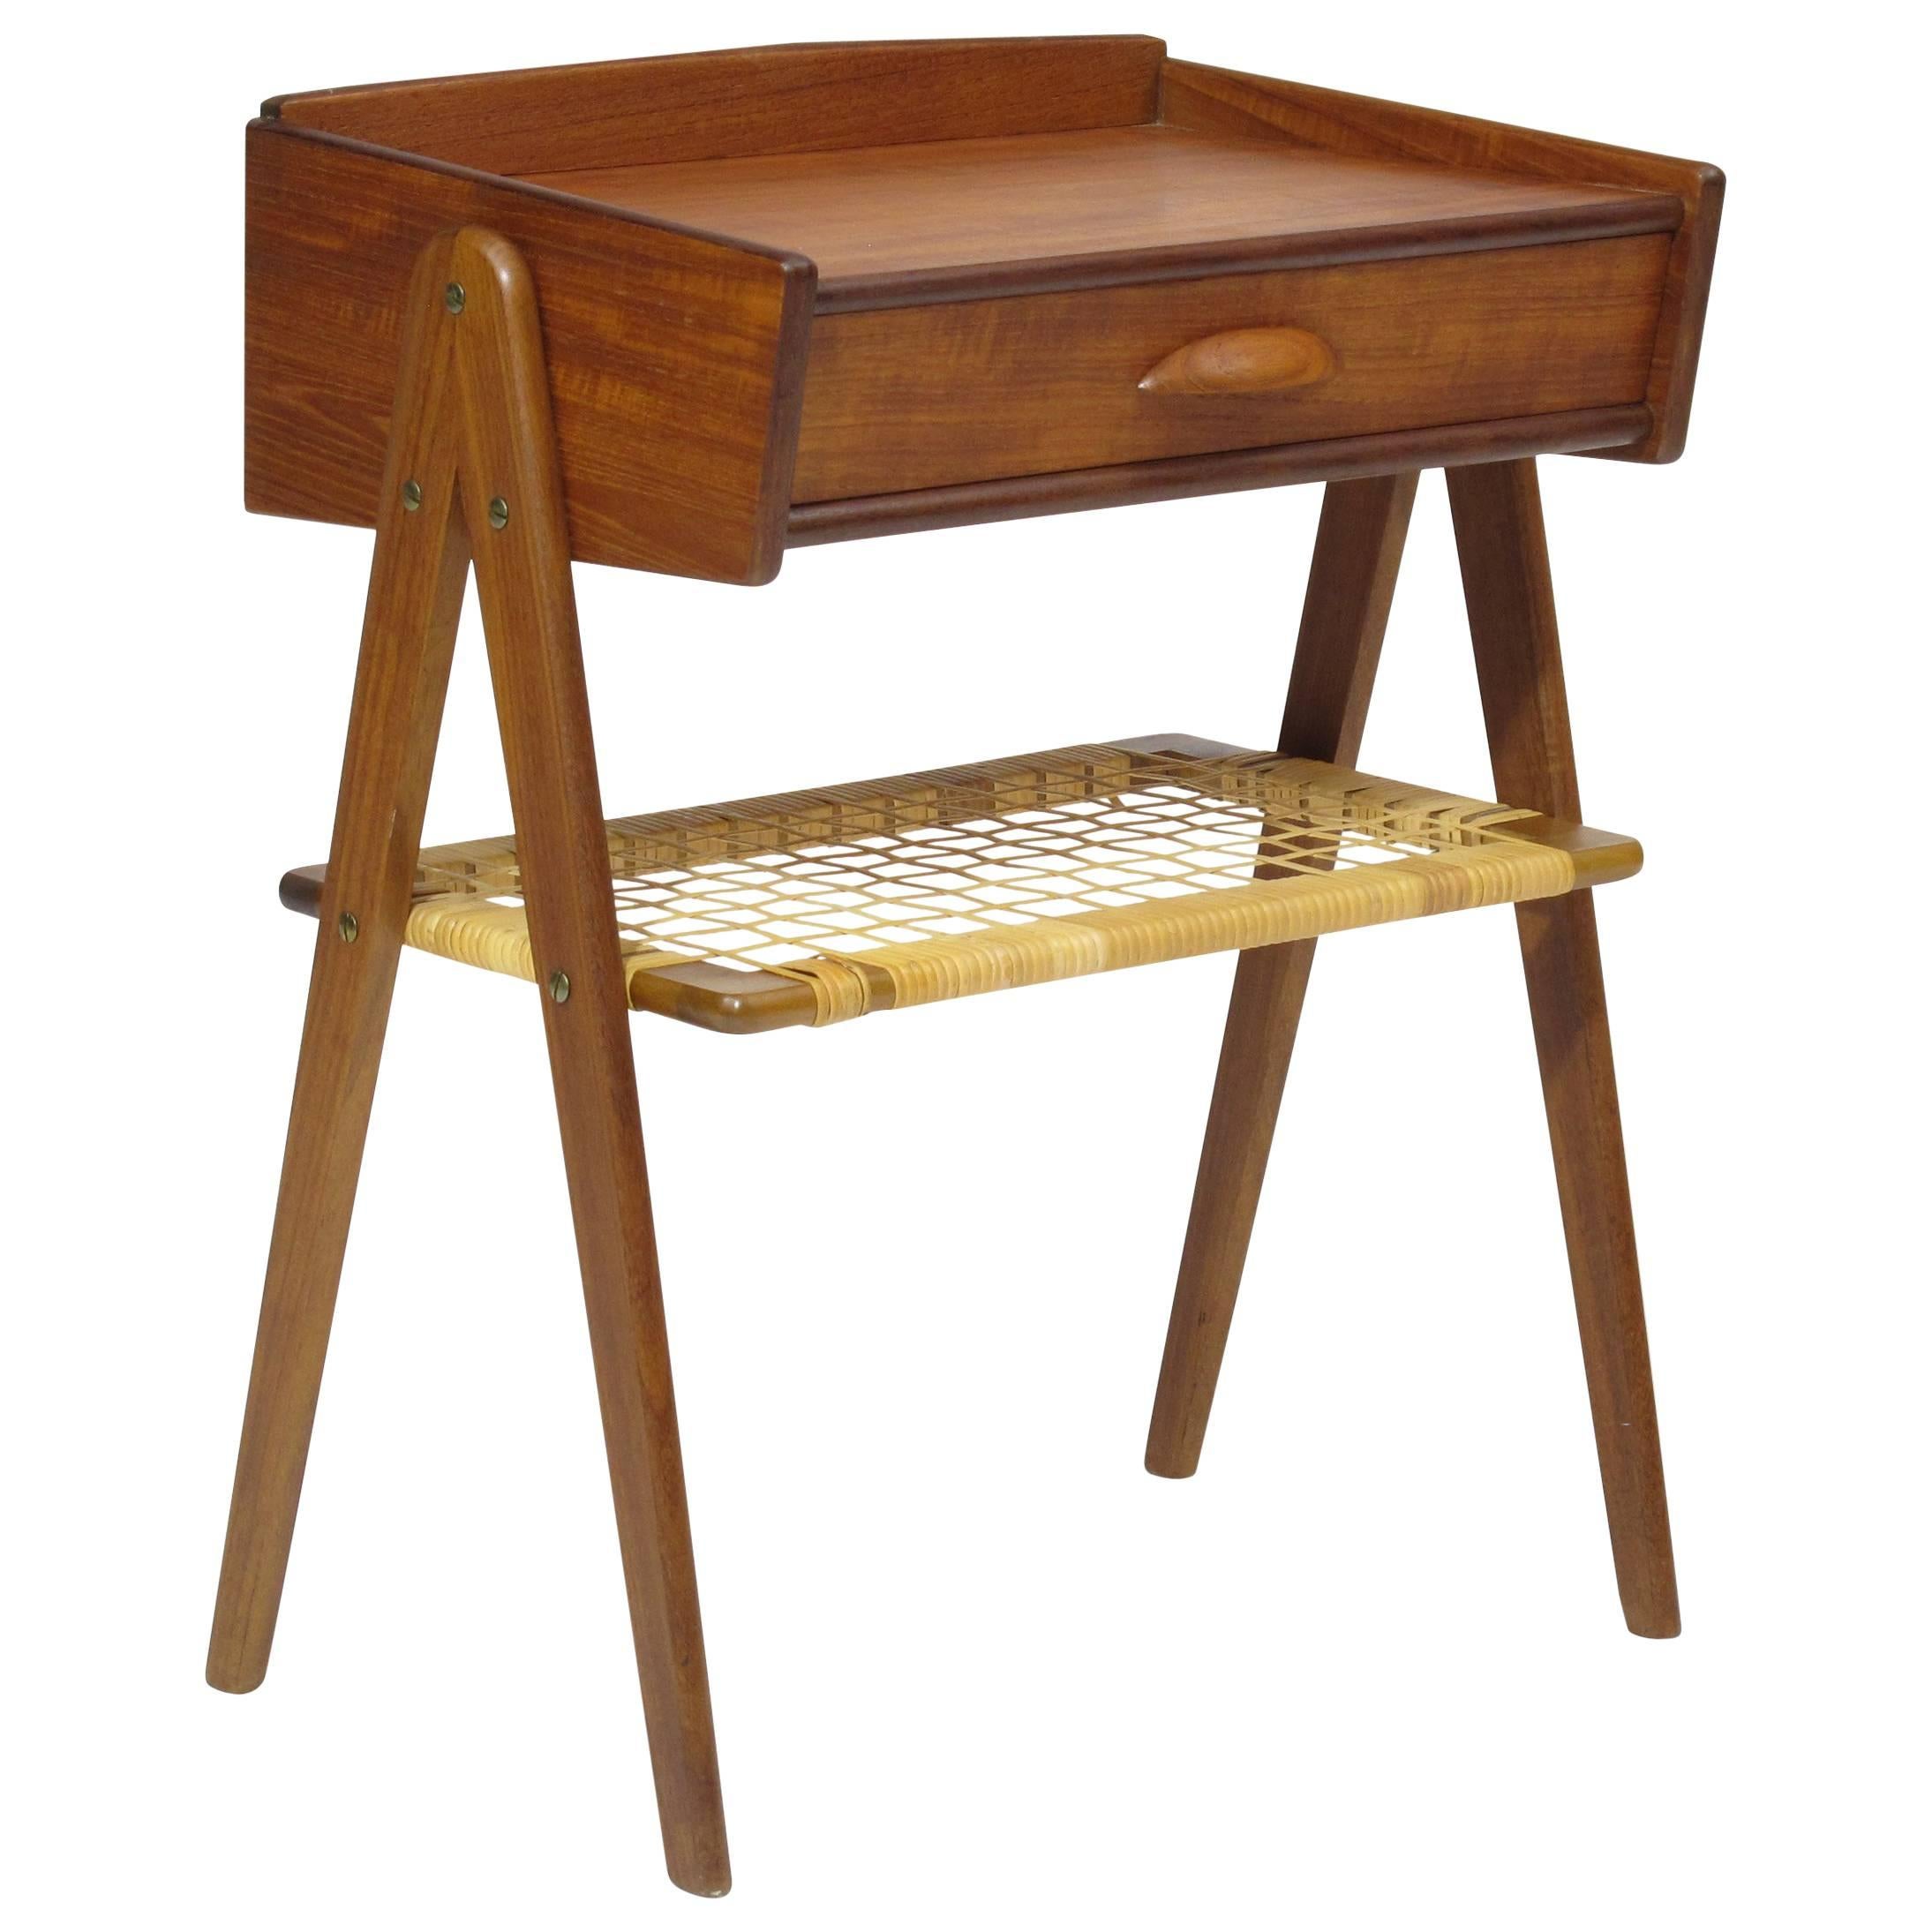 Danish Teak Side Table Nightstand with Woven Cane Shelf